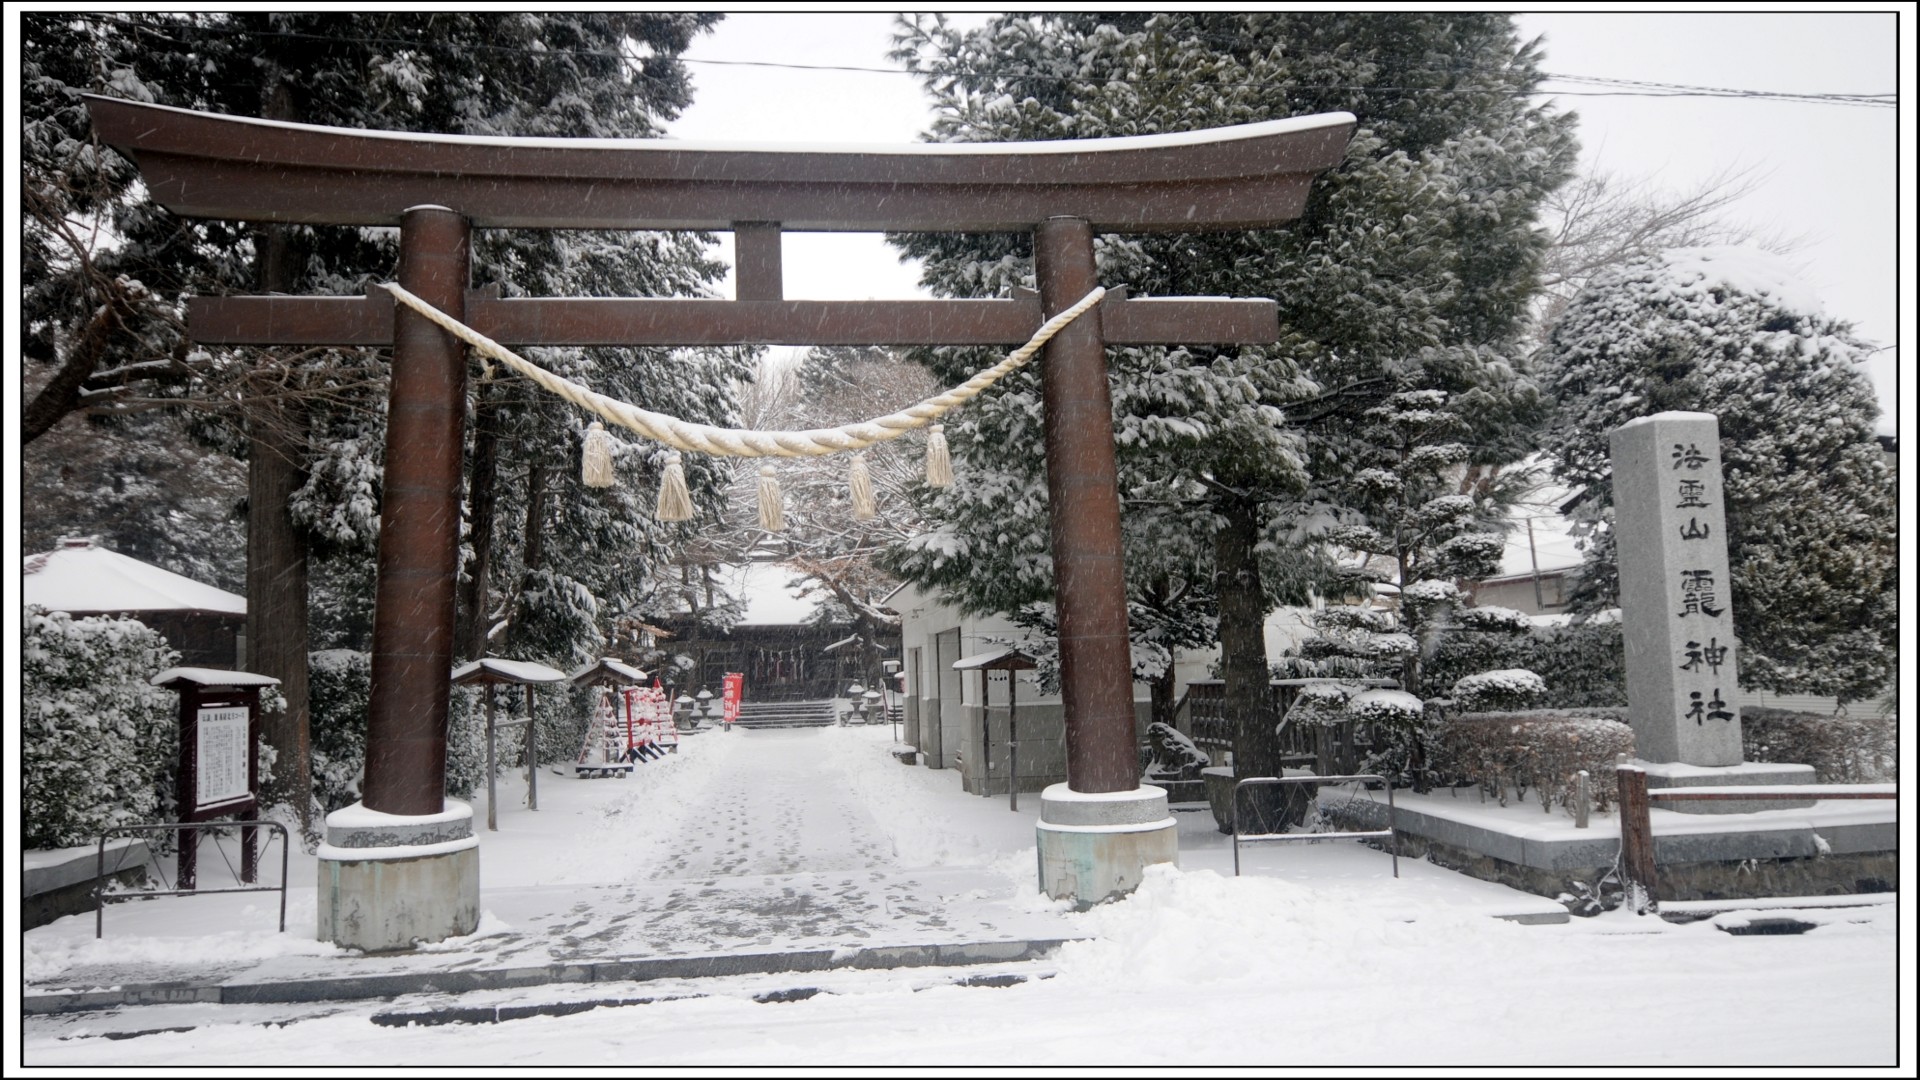 Archetecture Japan Kanji Snow Torii Gate Trees